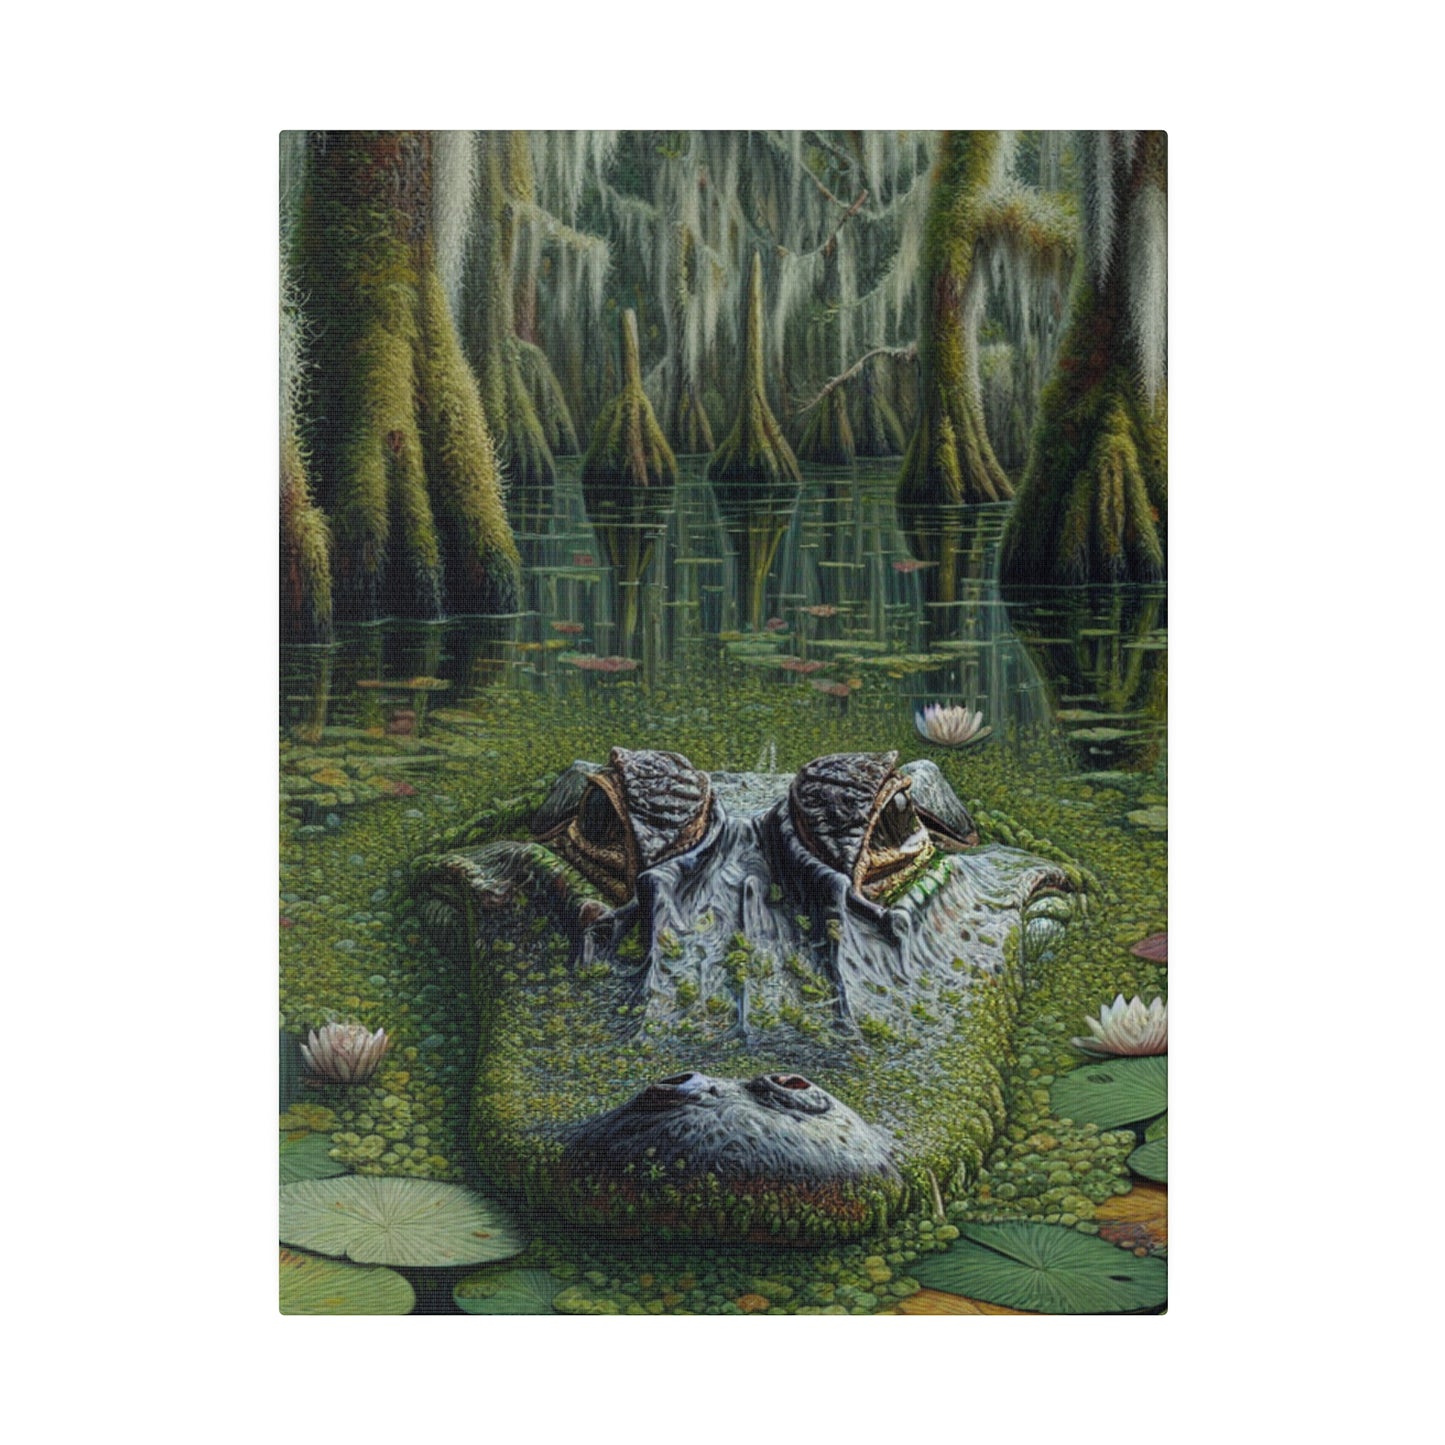 "Allure Alligator - Exotic Canvas Wall Art"